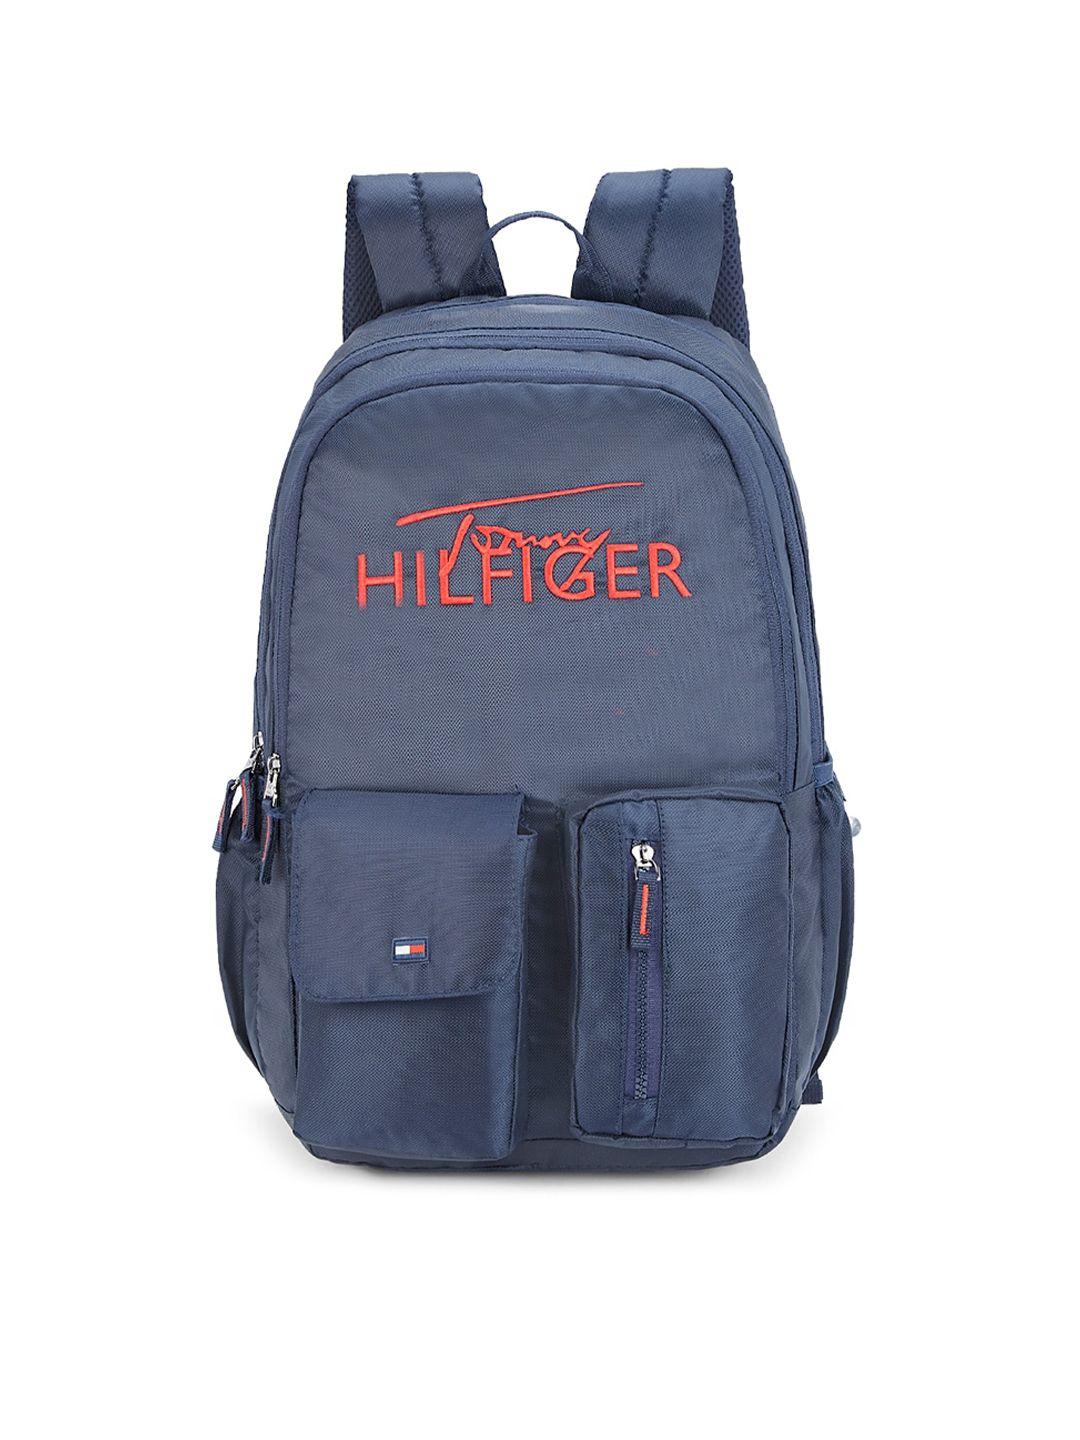 tommy hilfiger unisex navy blue & red backpack